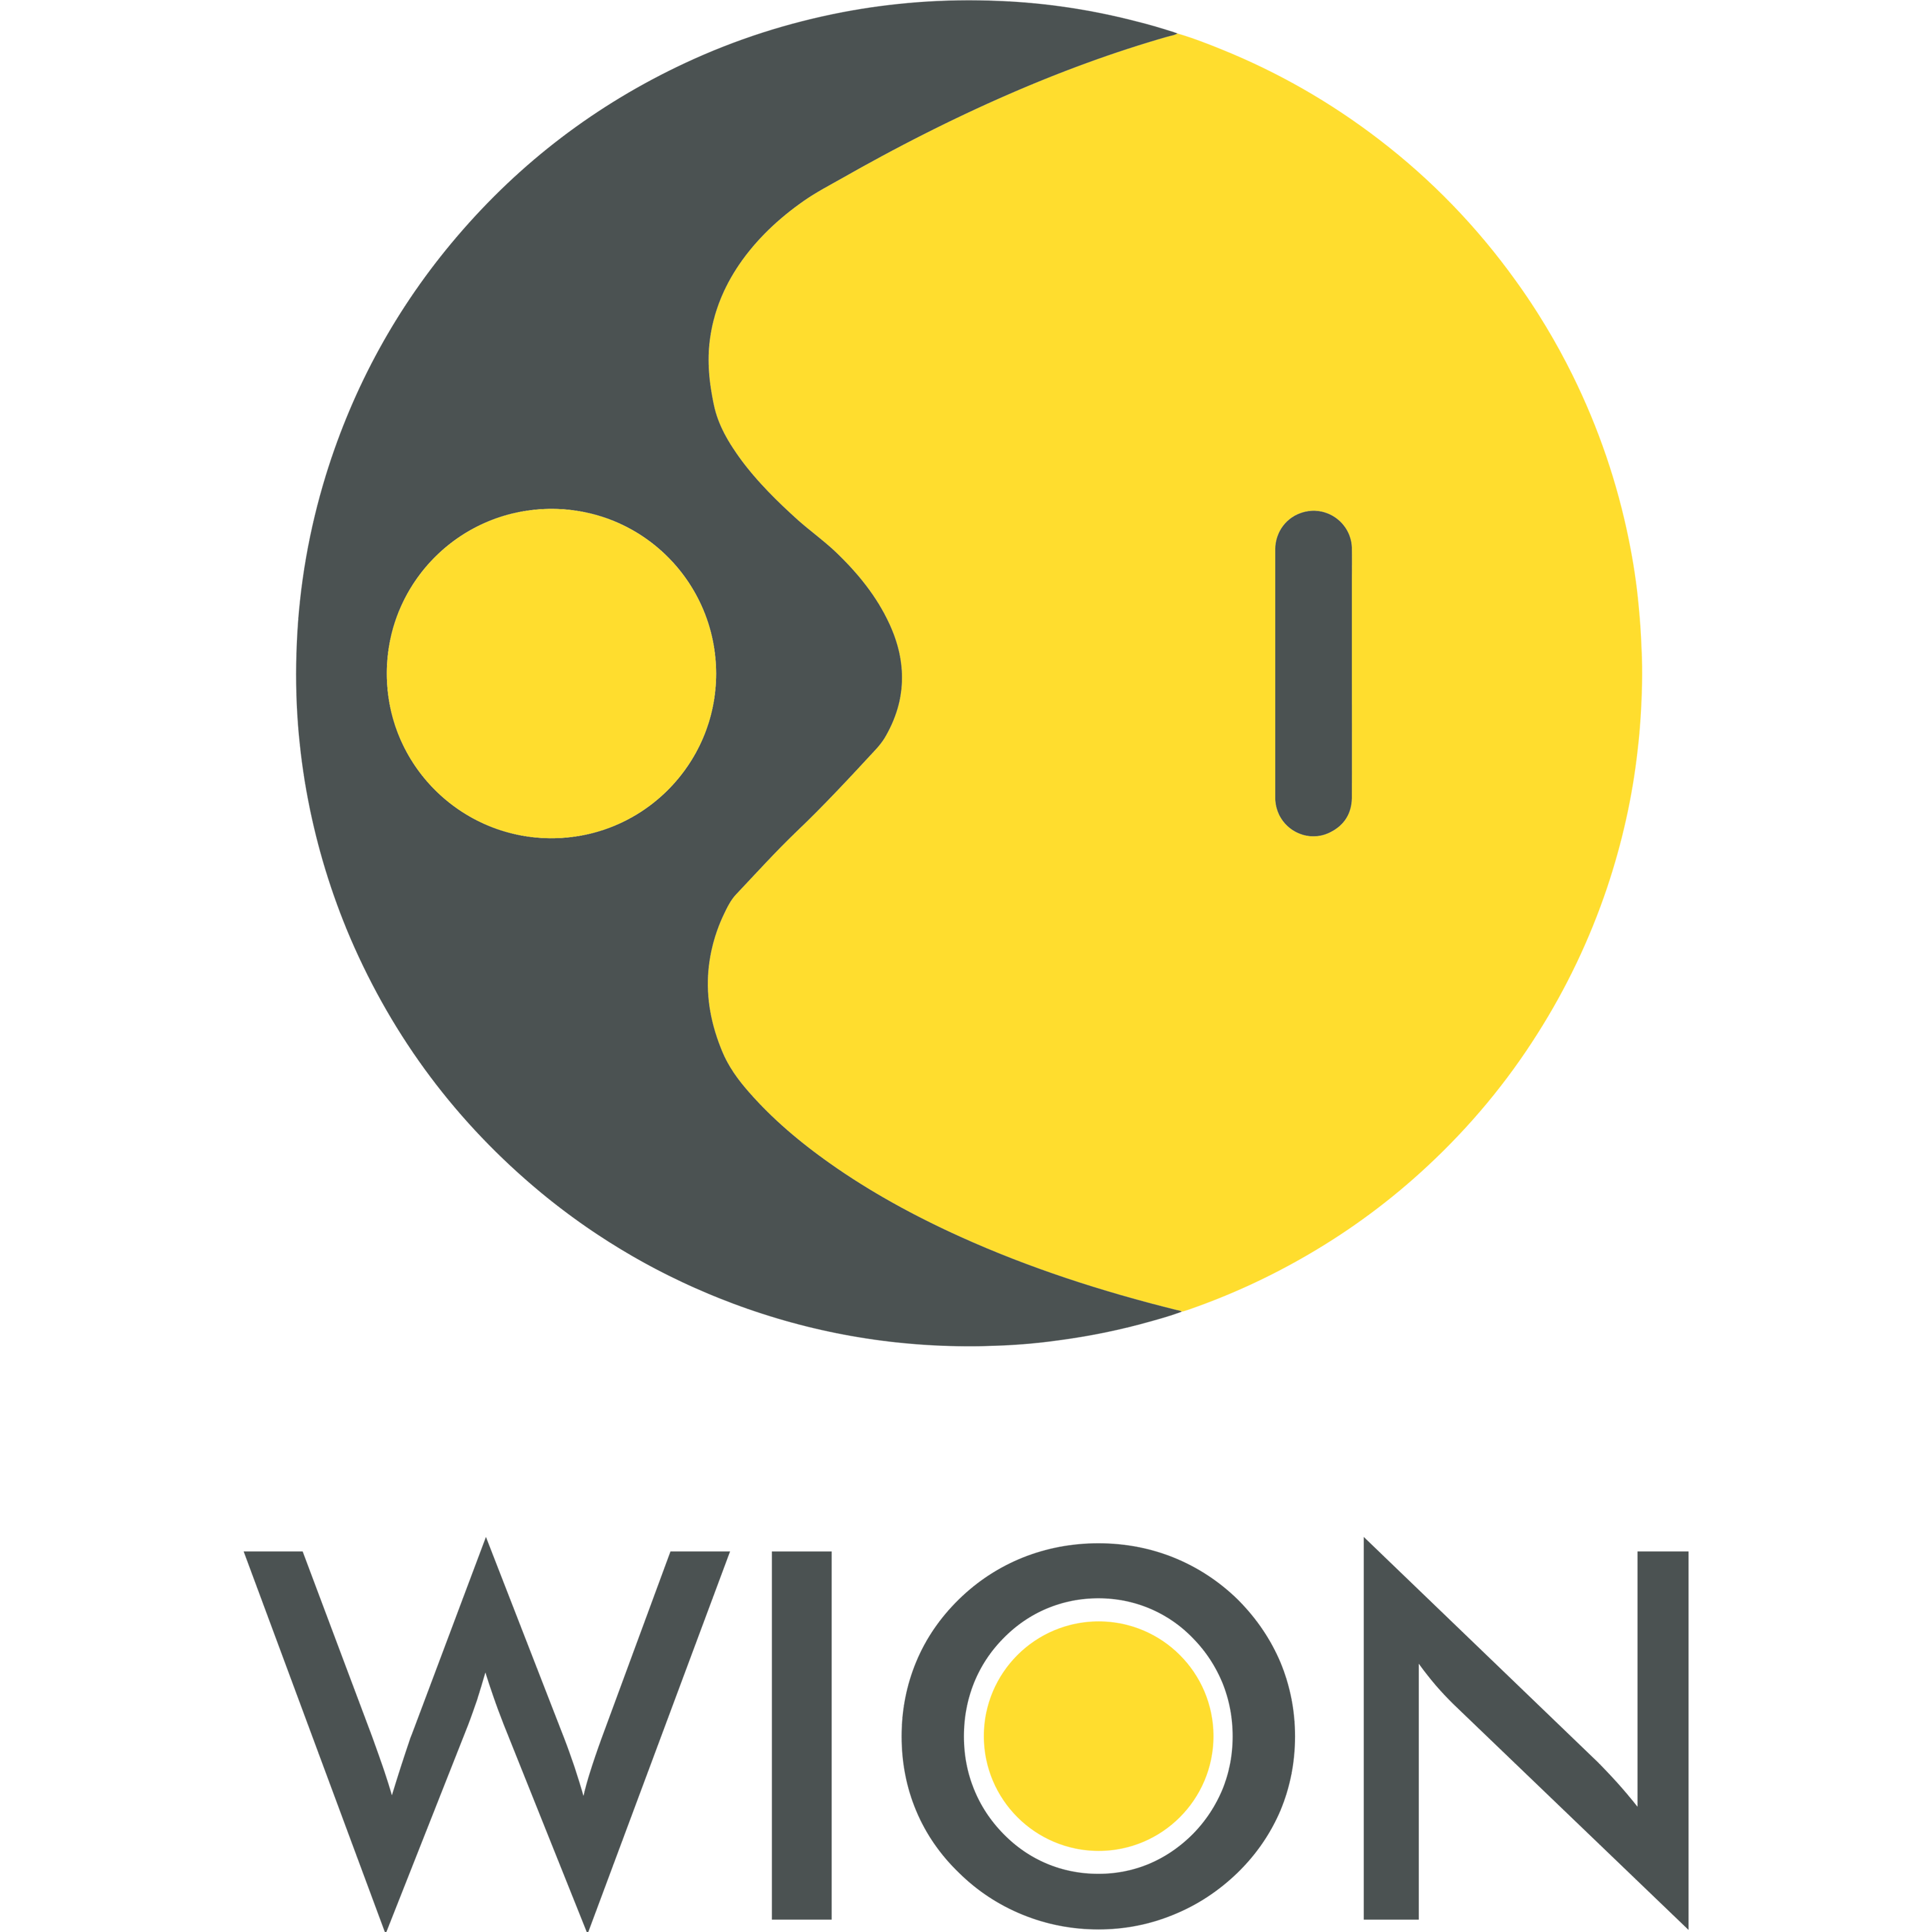 WION Logo Transparent Image